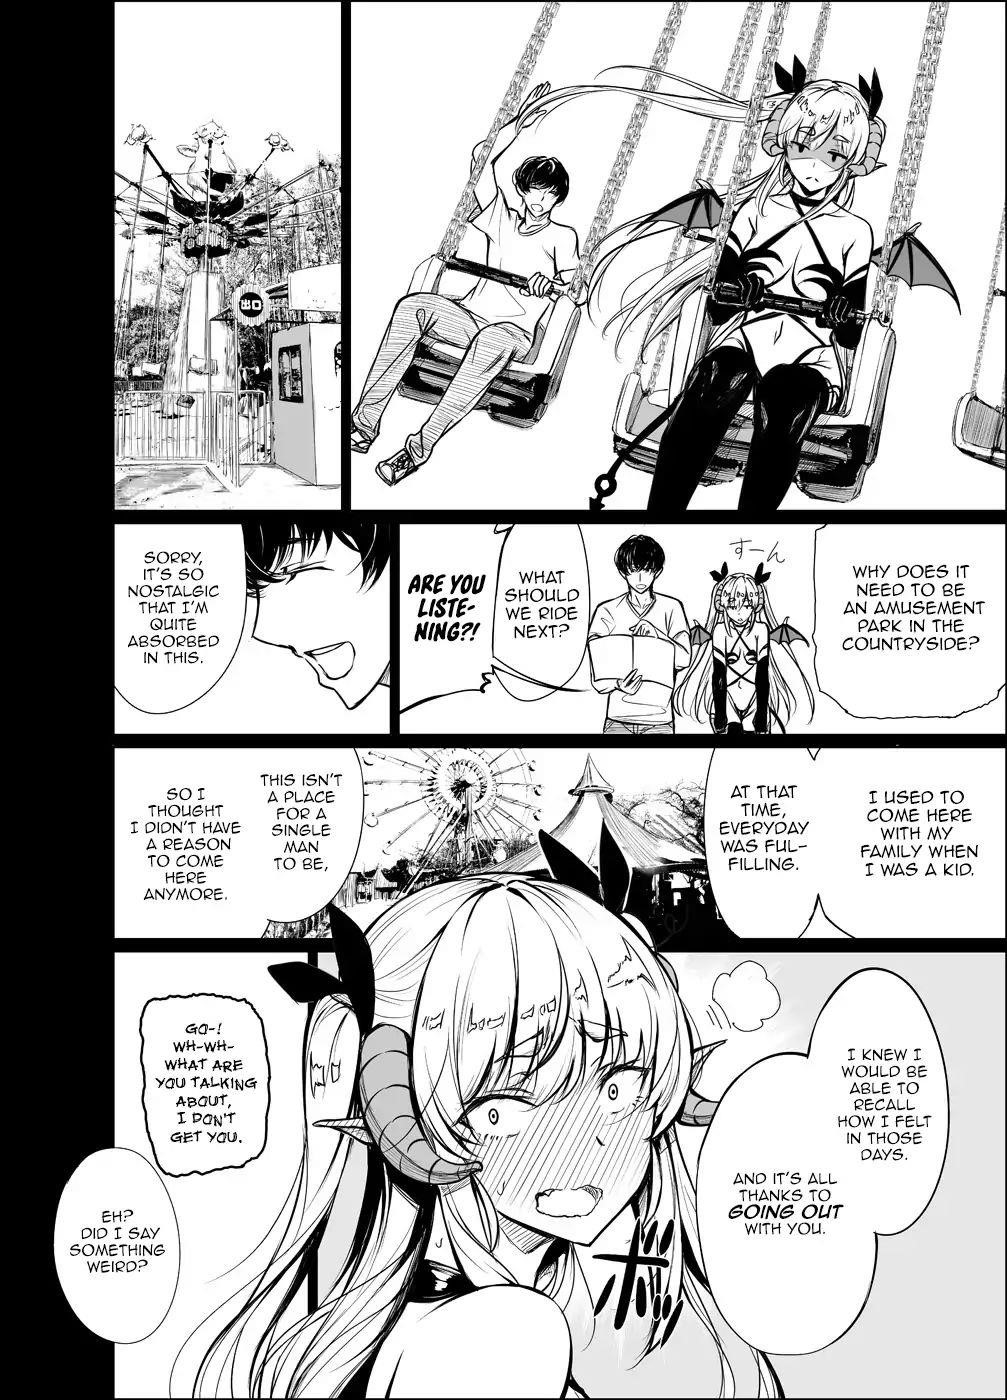 manga about a succubus